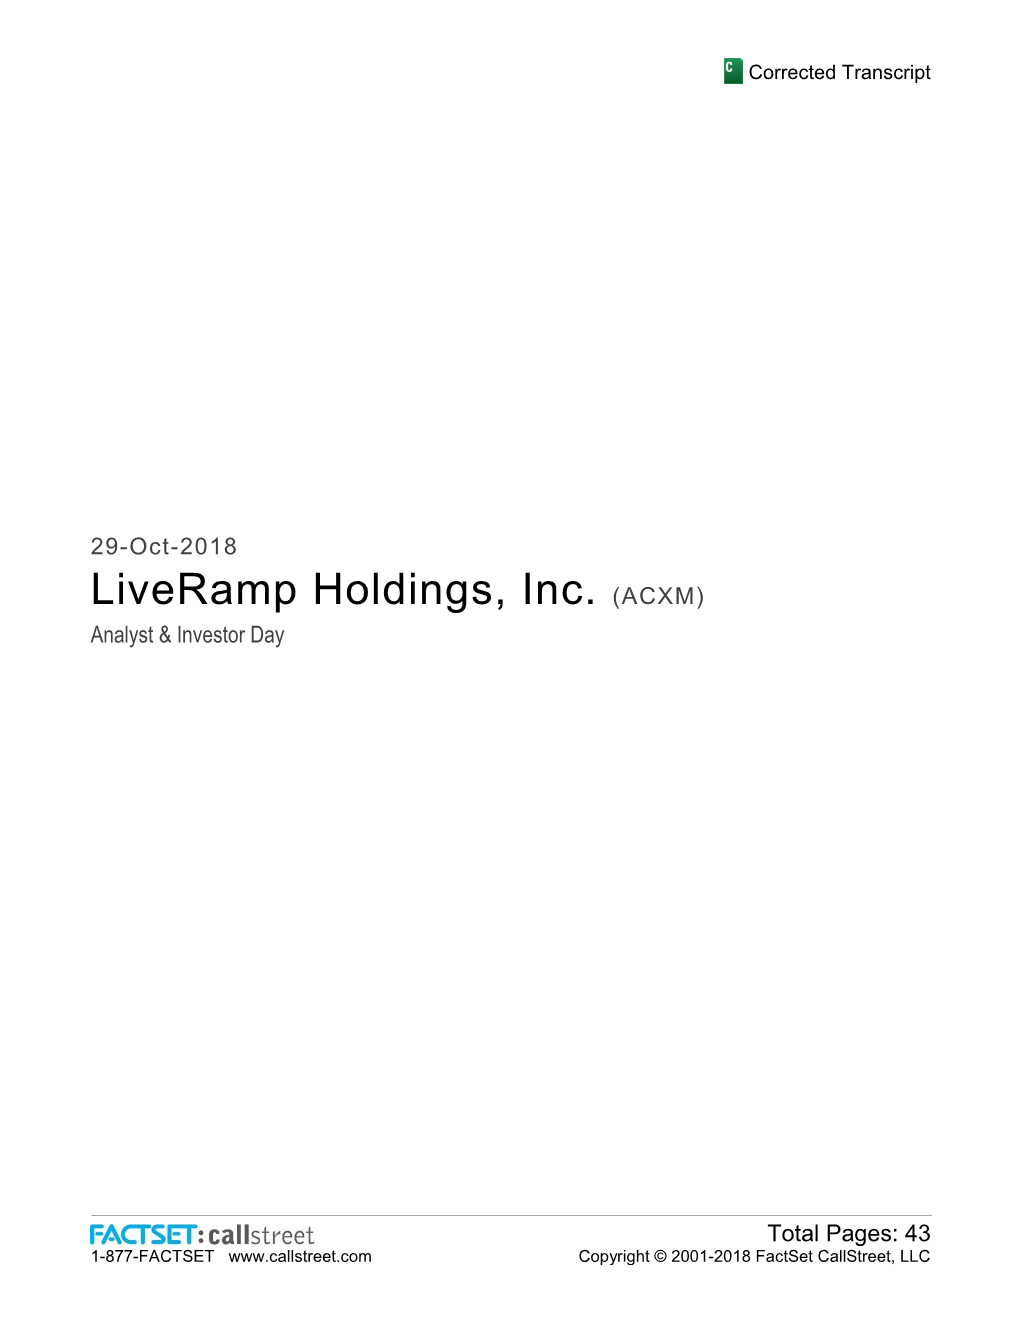 Liveramp Holdings, Inc. (ACXM) Analyst & Investor Day